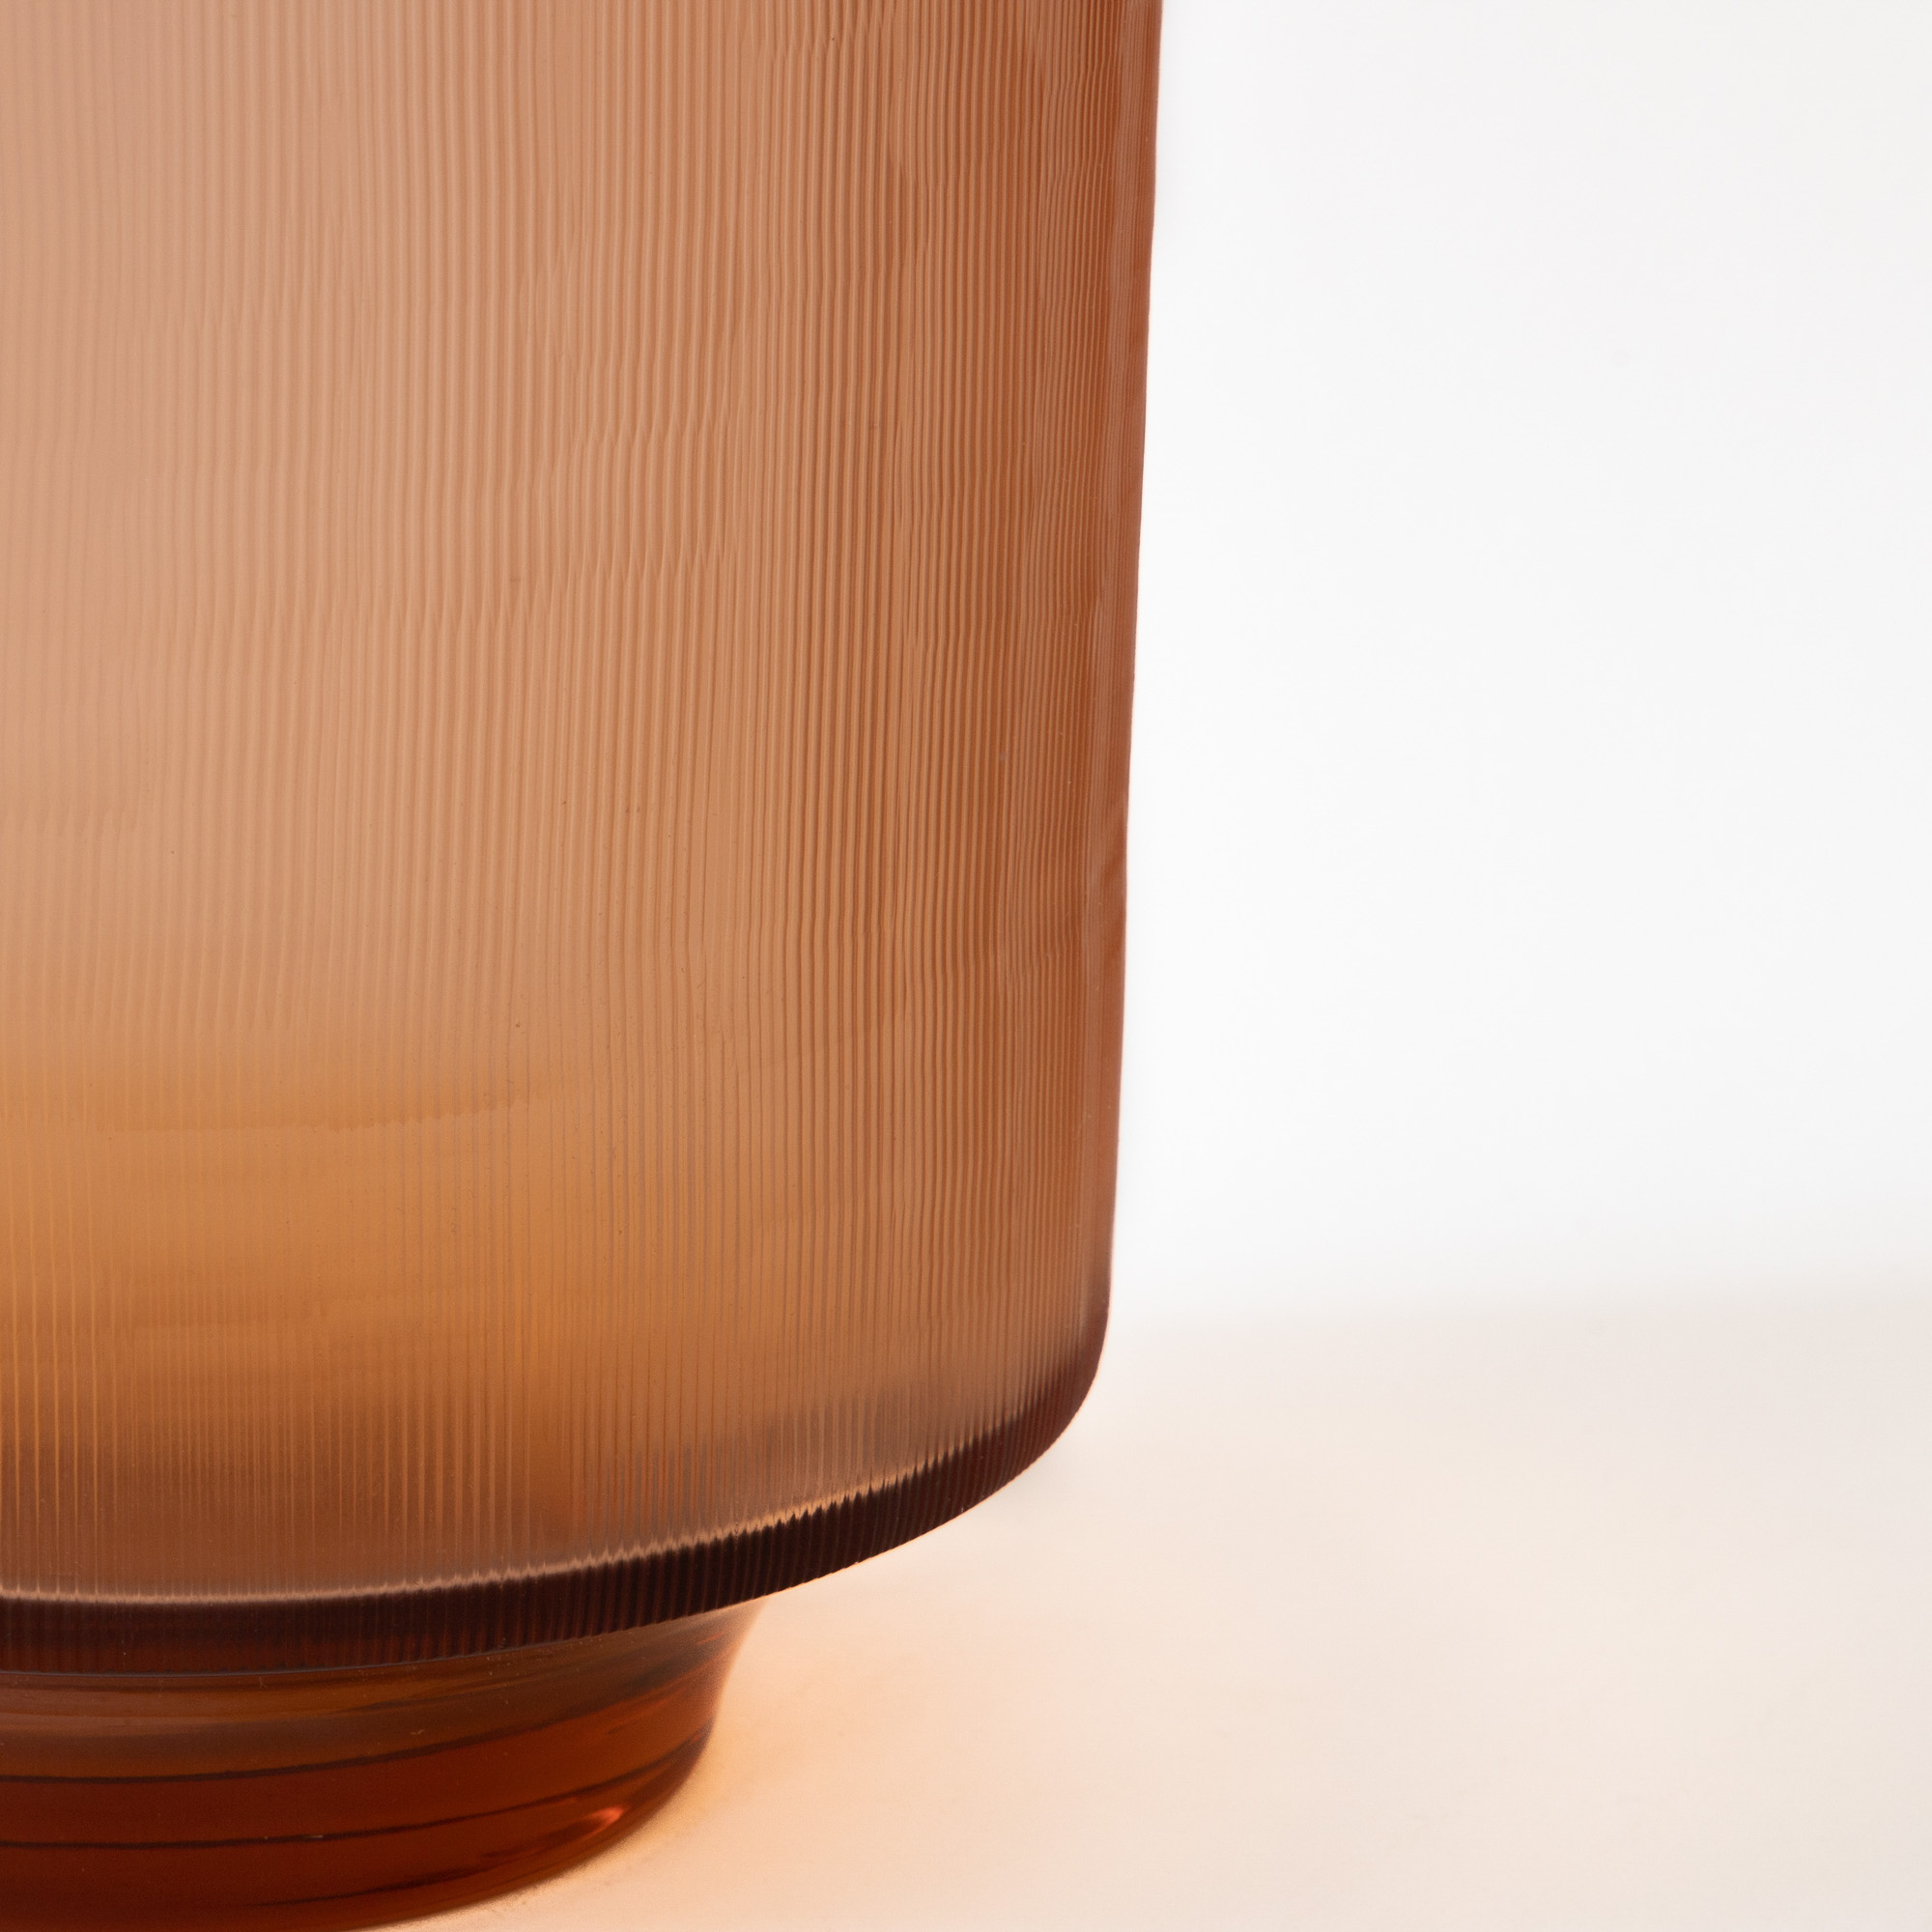 Nebula Glass Vase - Copper